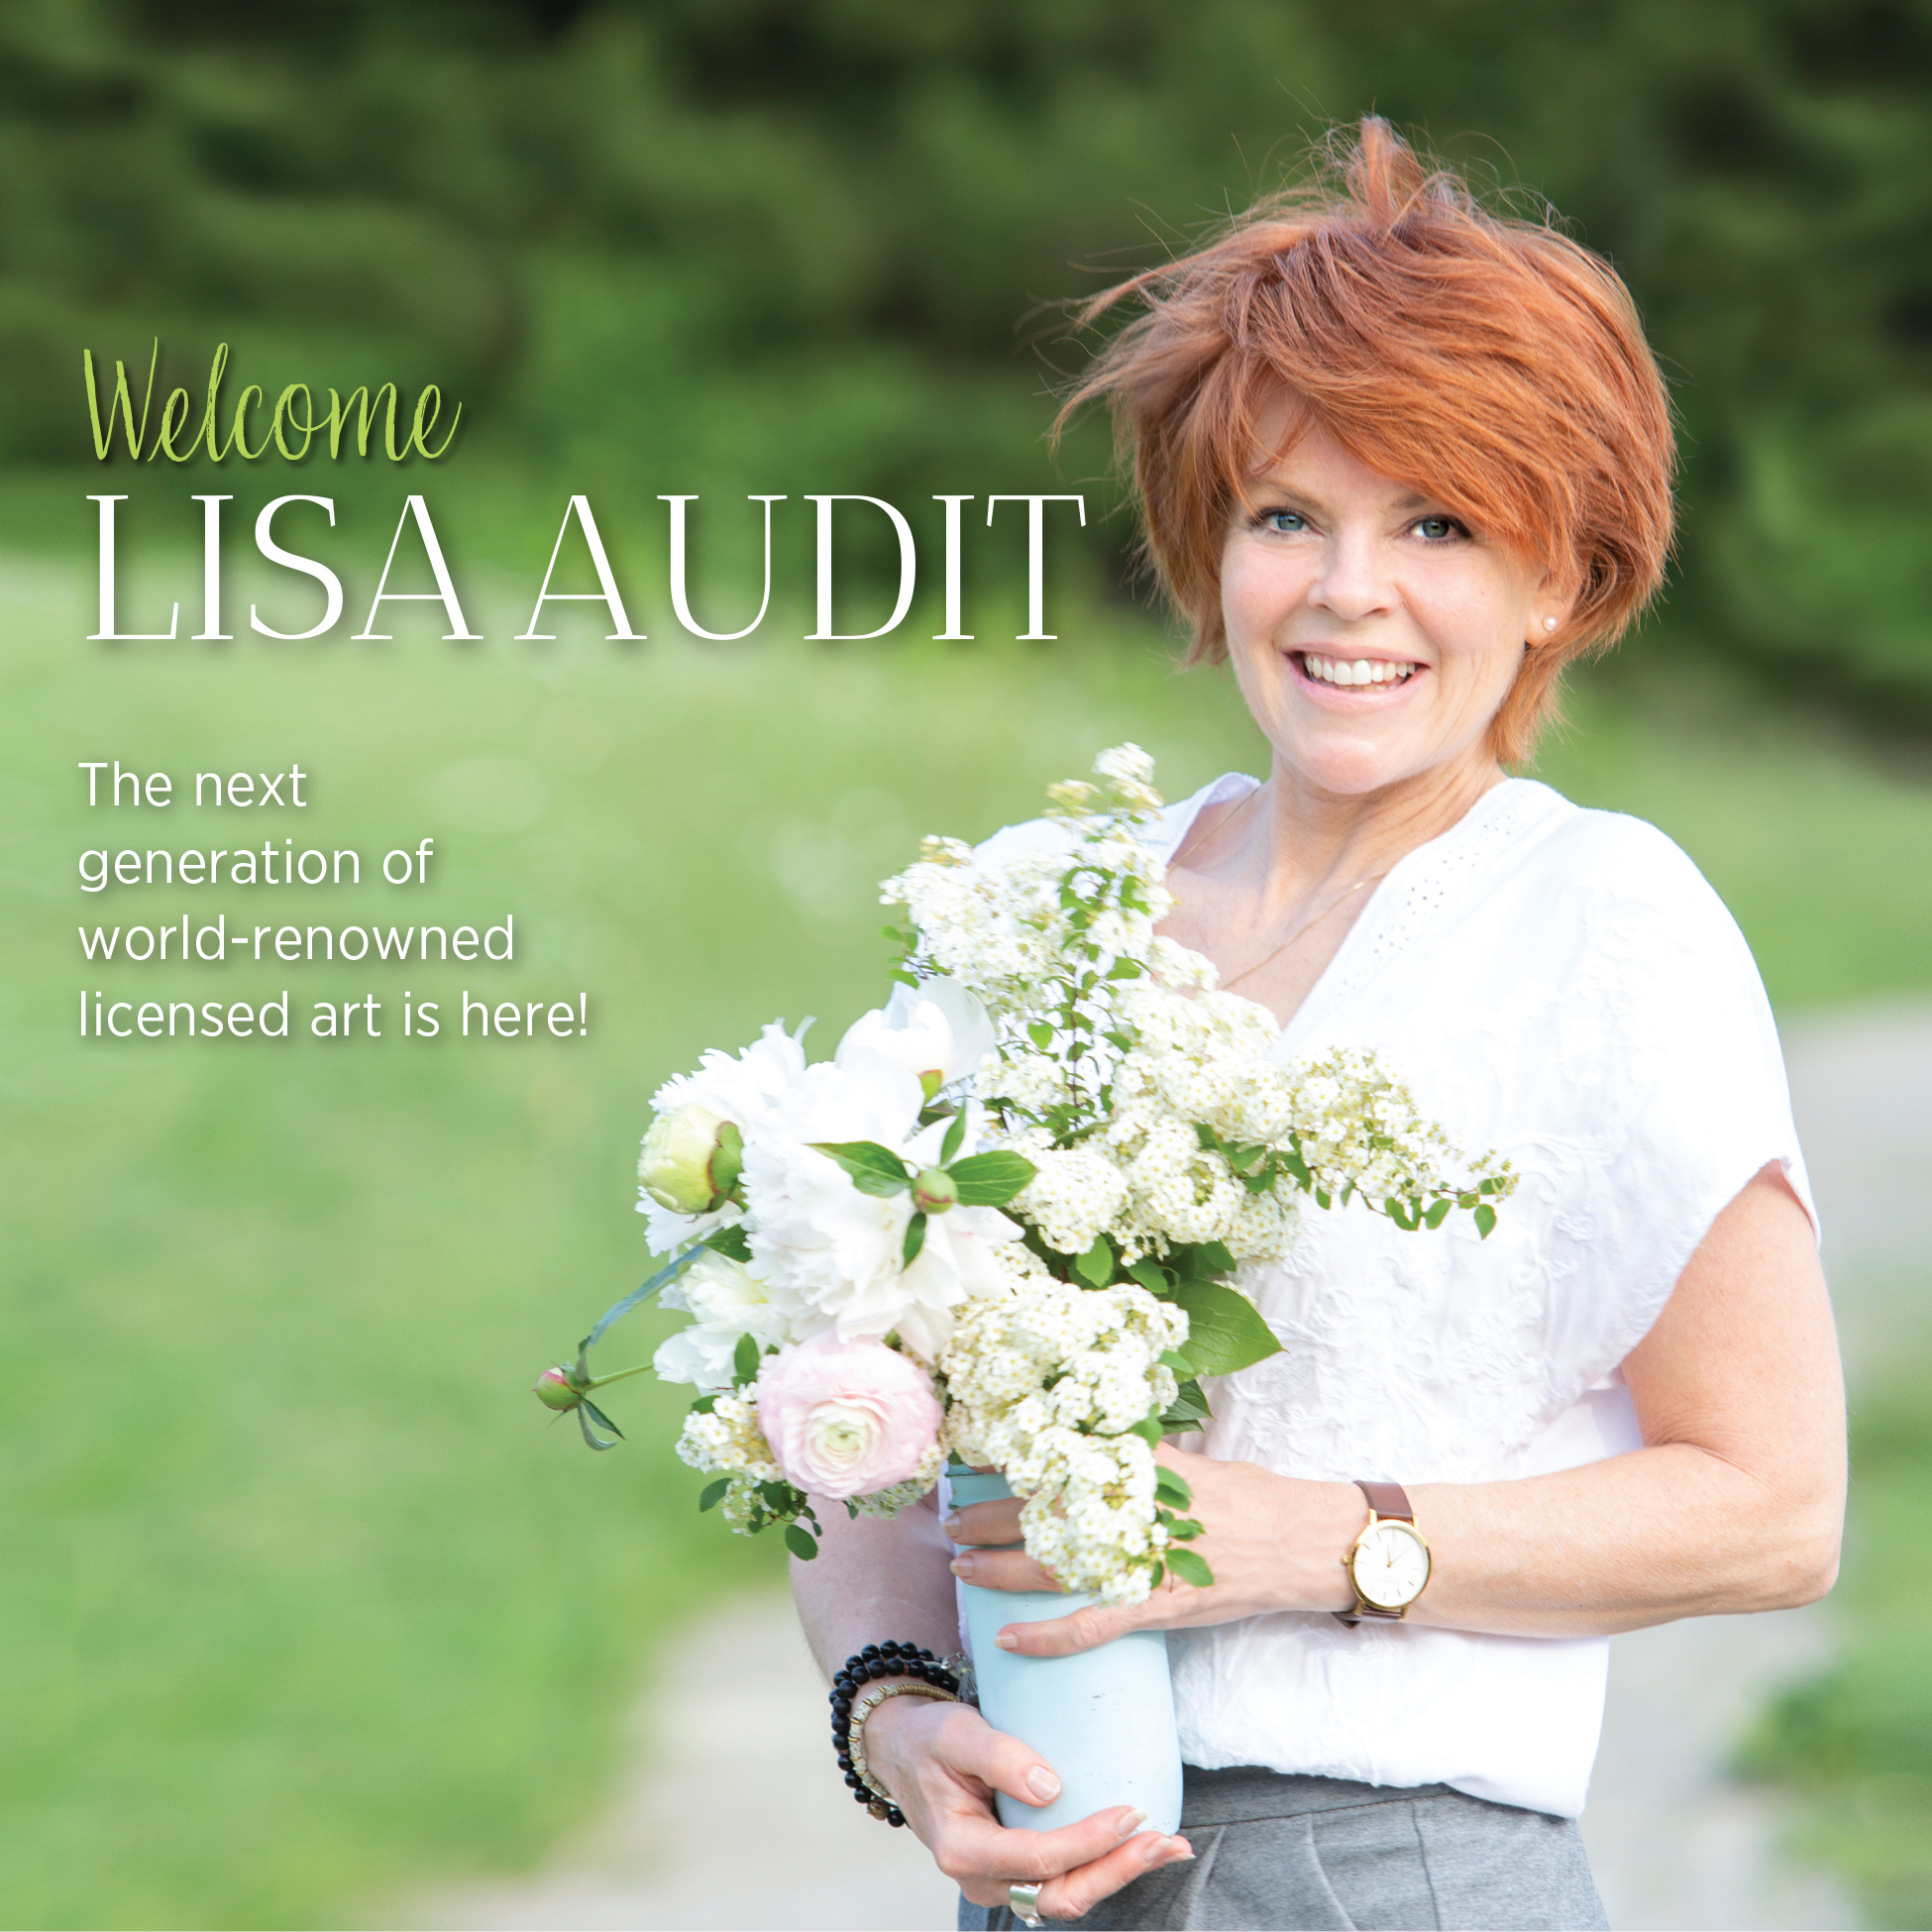 Welcome Lisa Audit!